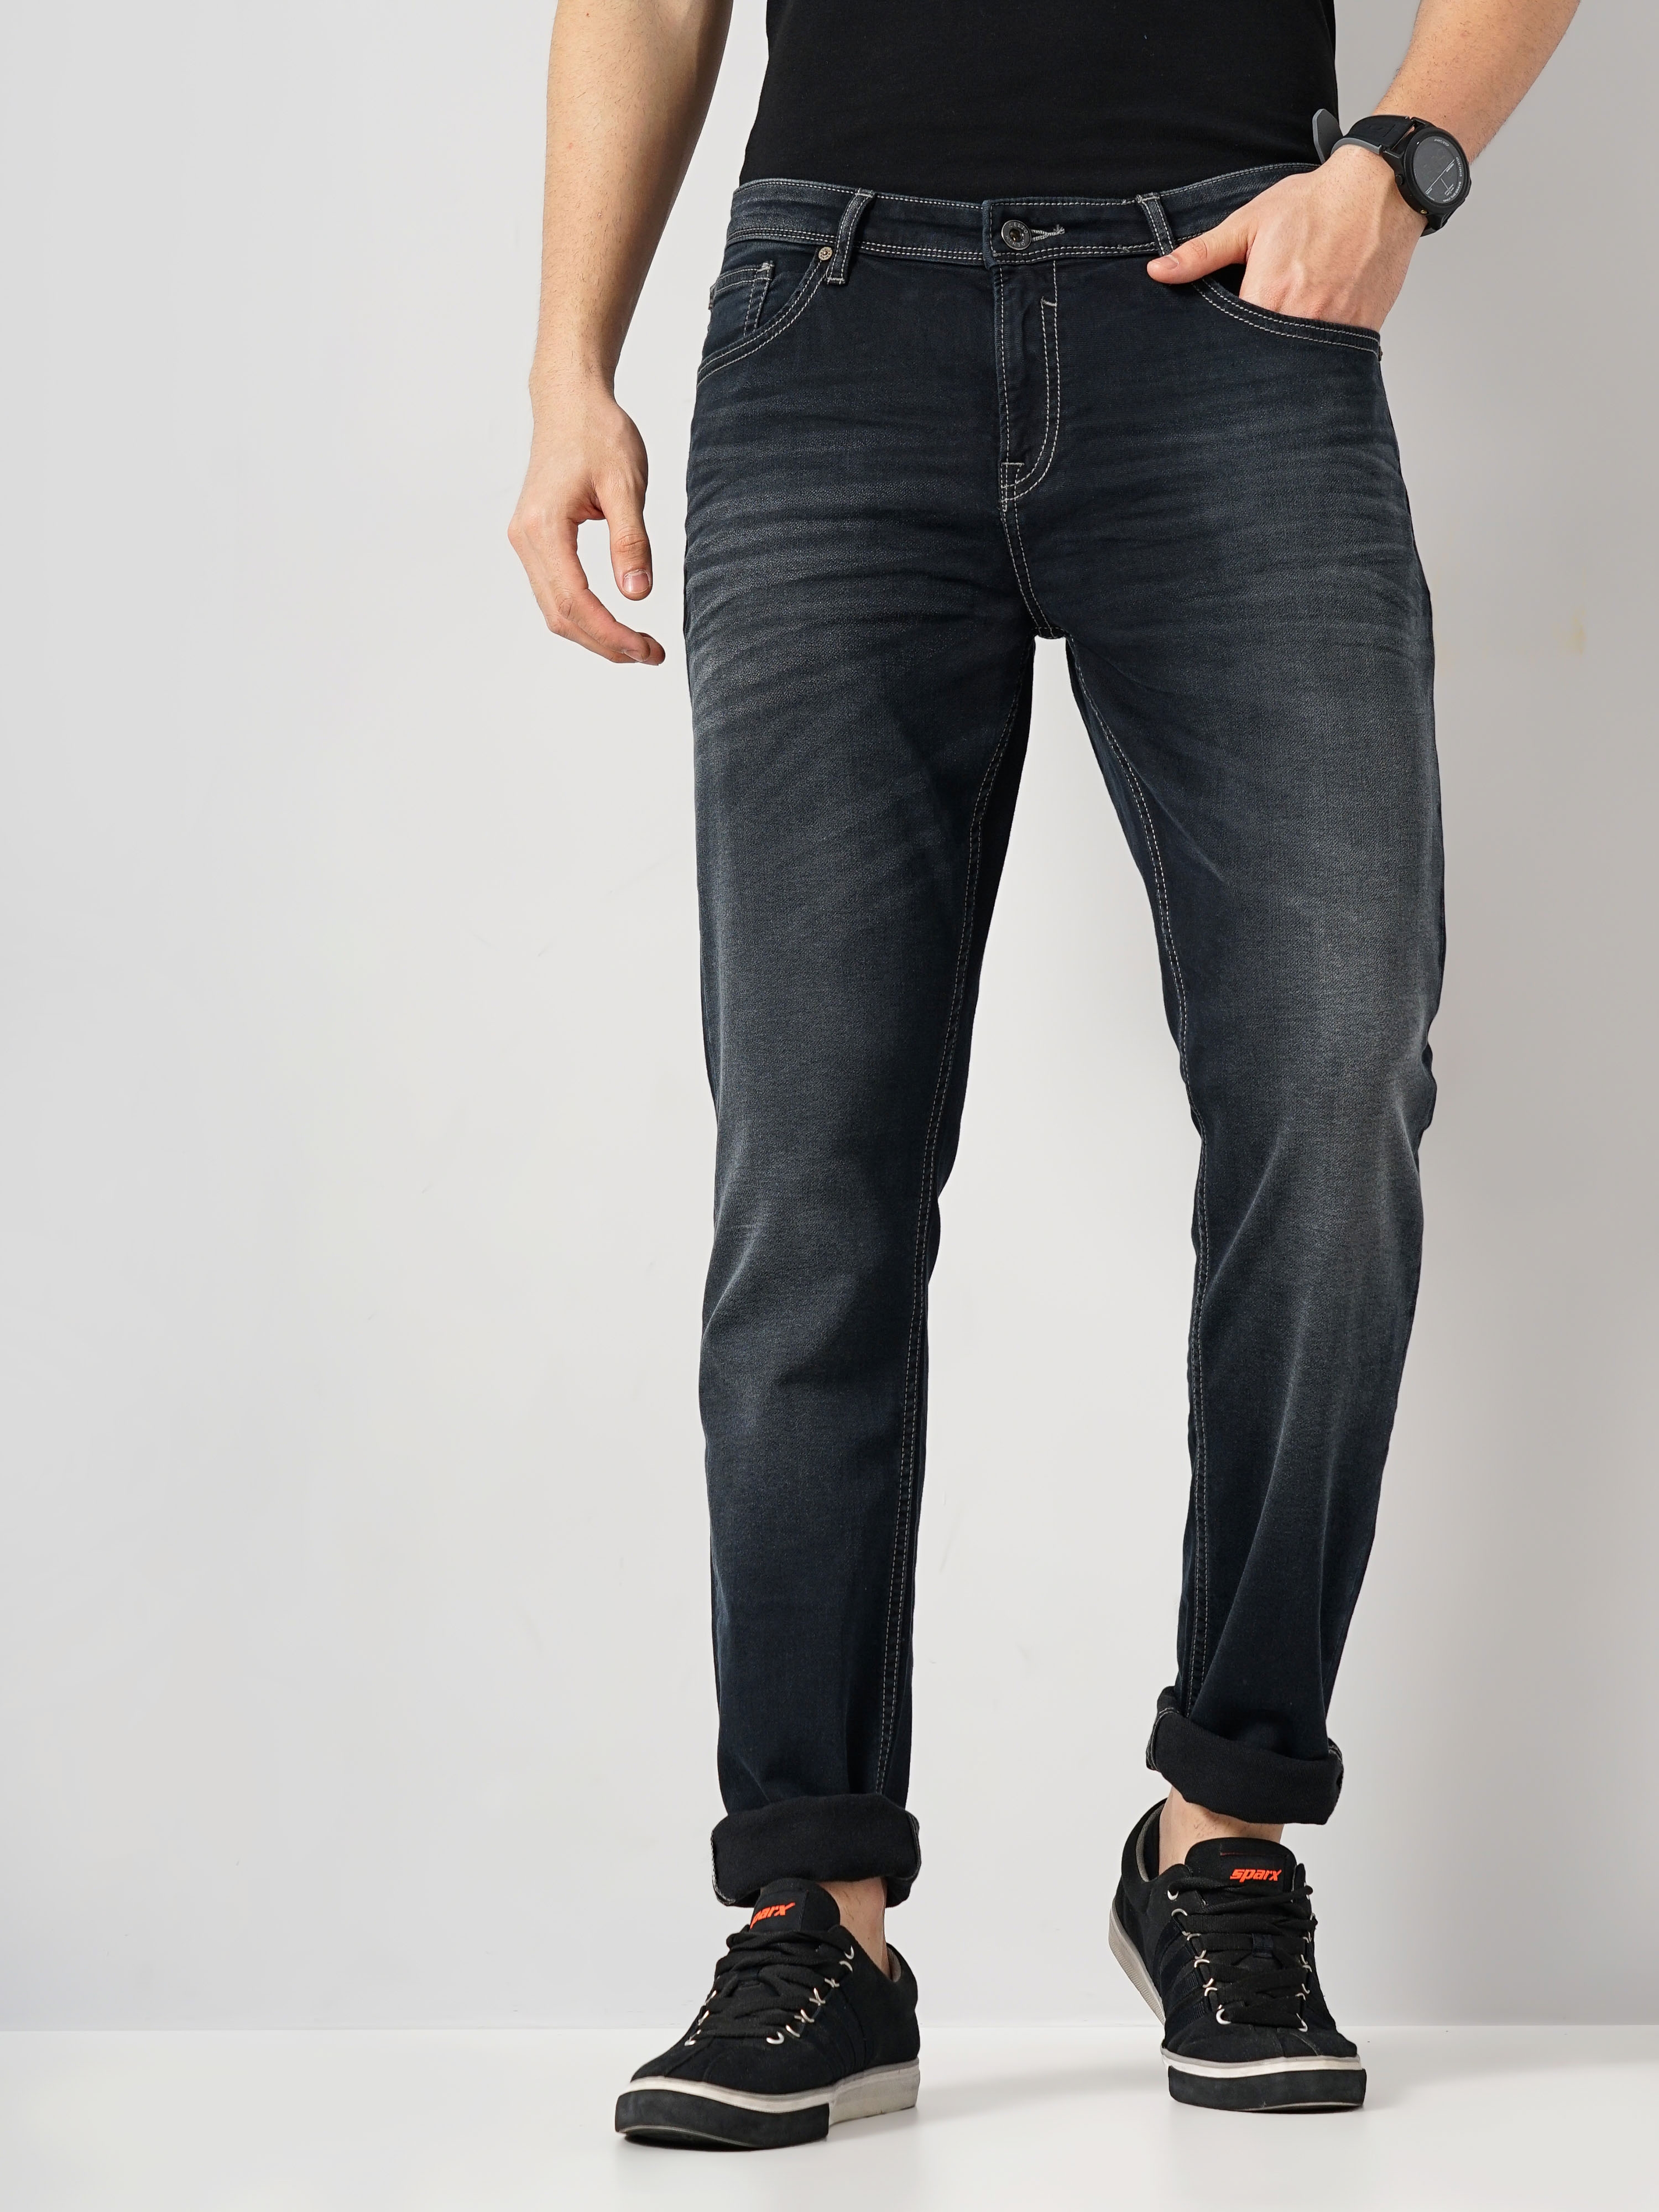 Denim Leopard Flare Jeans | Denim flares, Denim flare jeans, Flare jeans